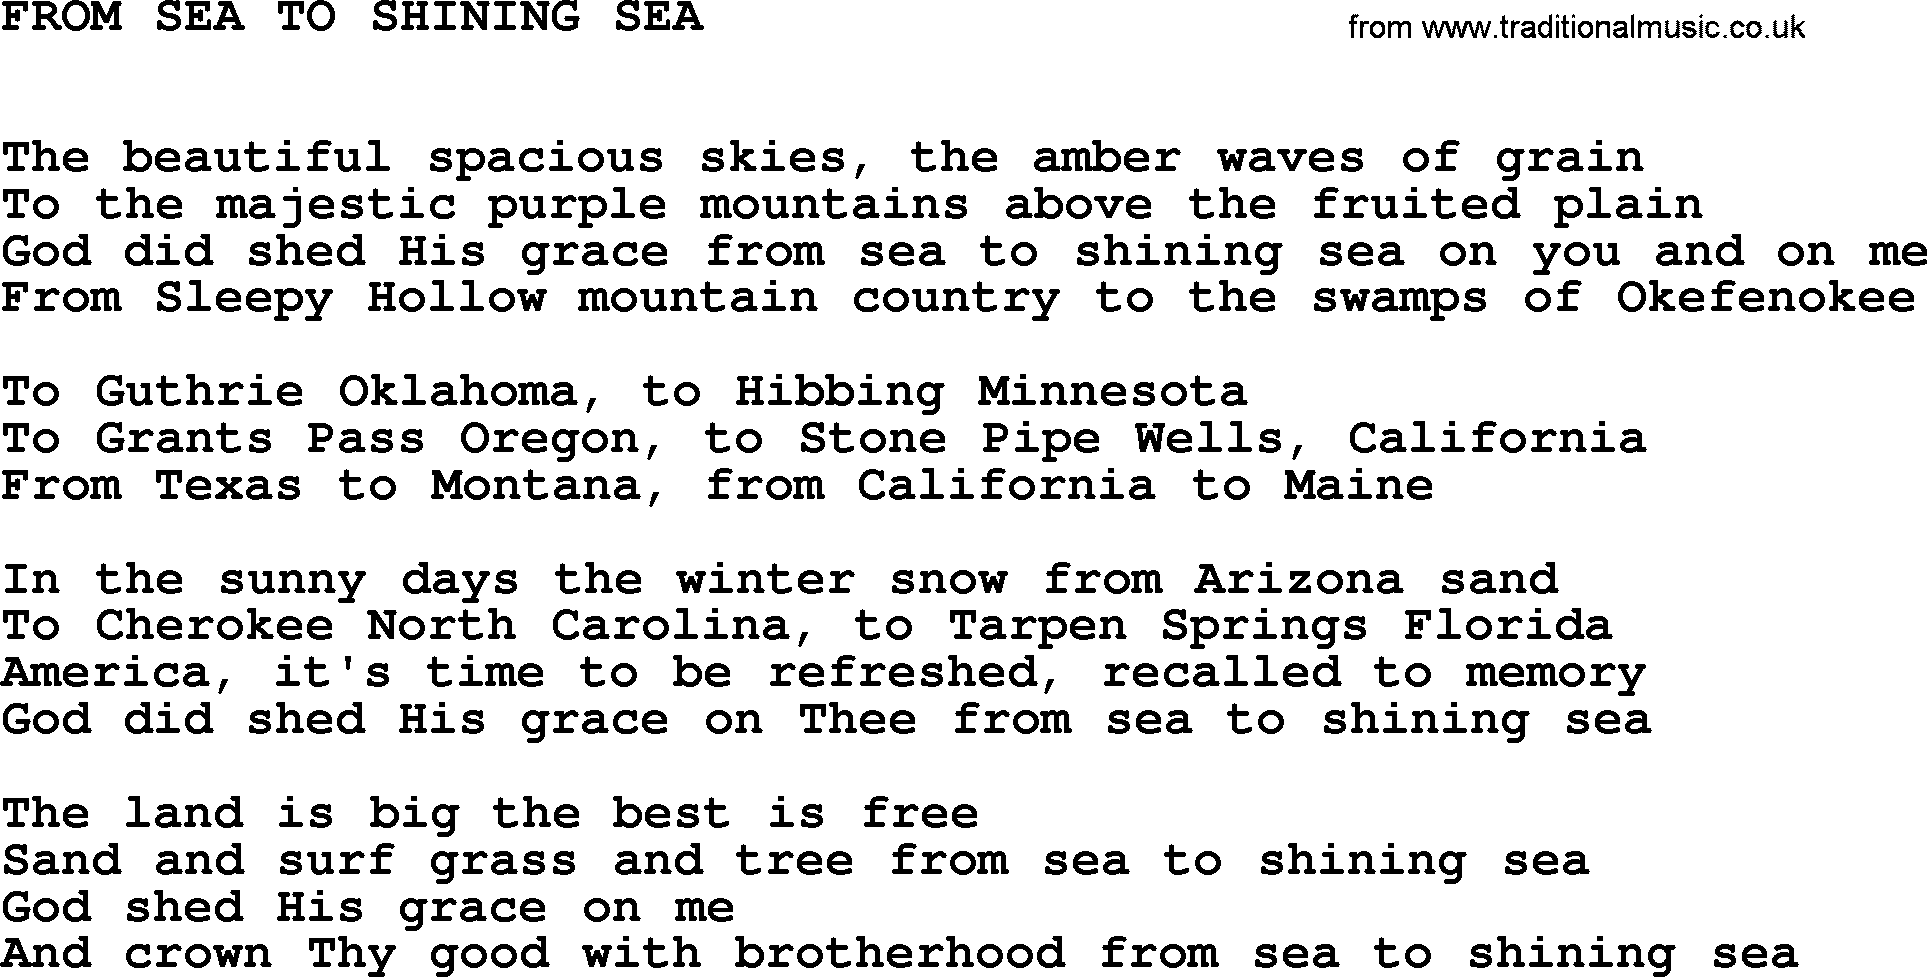 Johnny Cash song From Sea To Shining Sea.txt lyrics